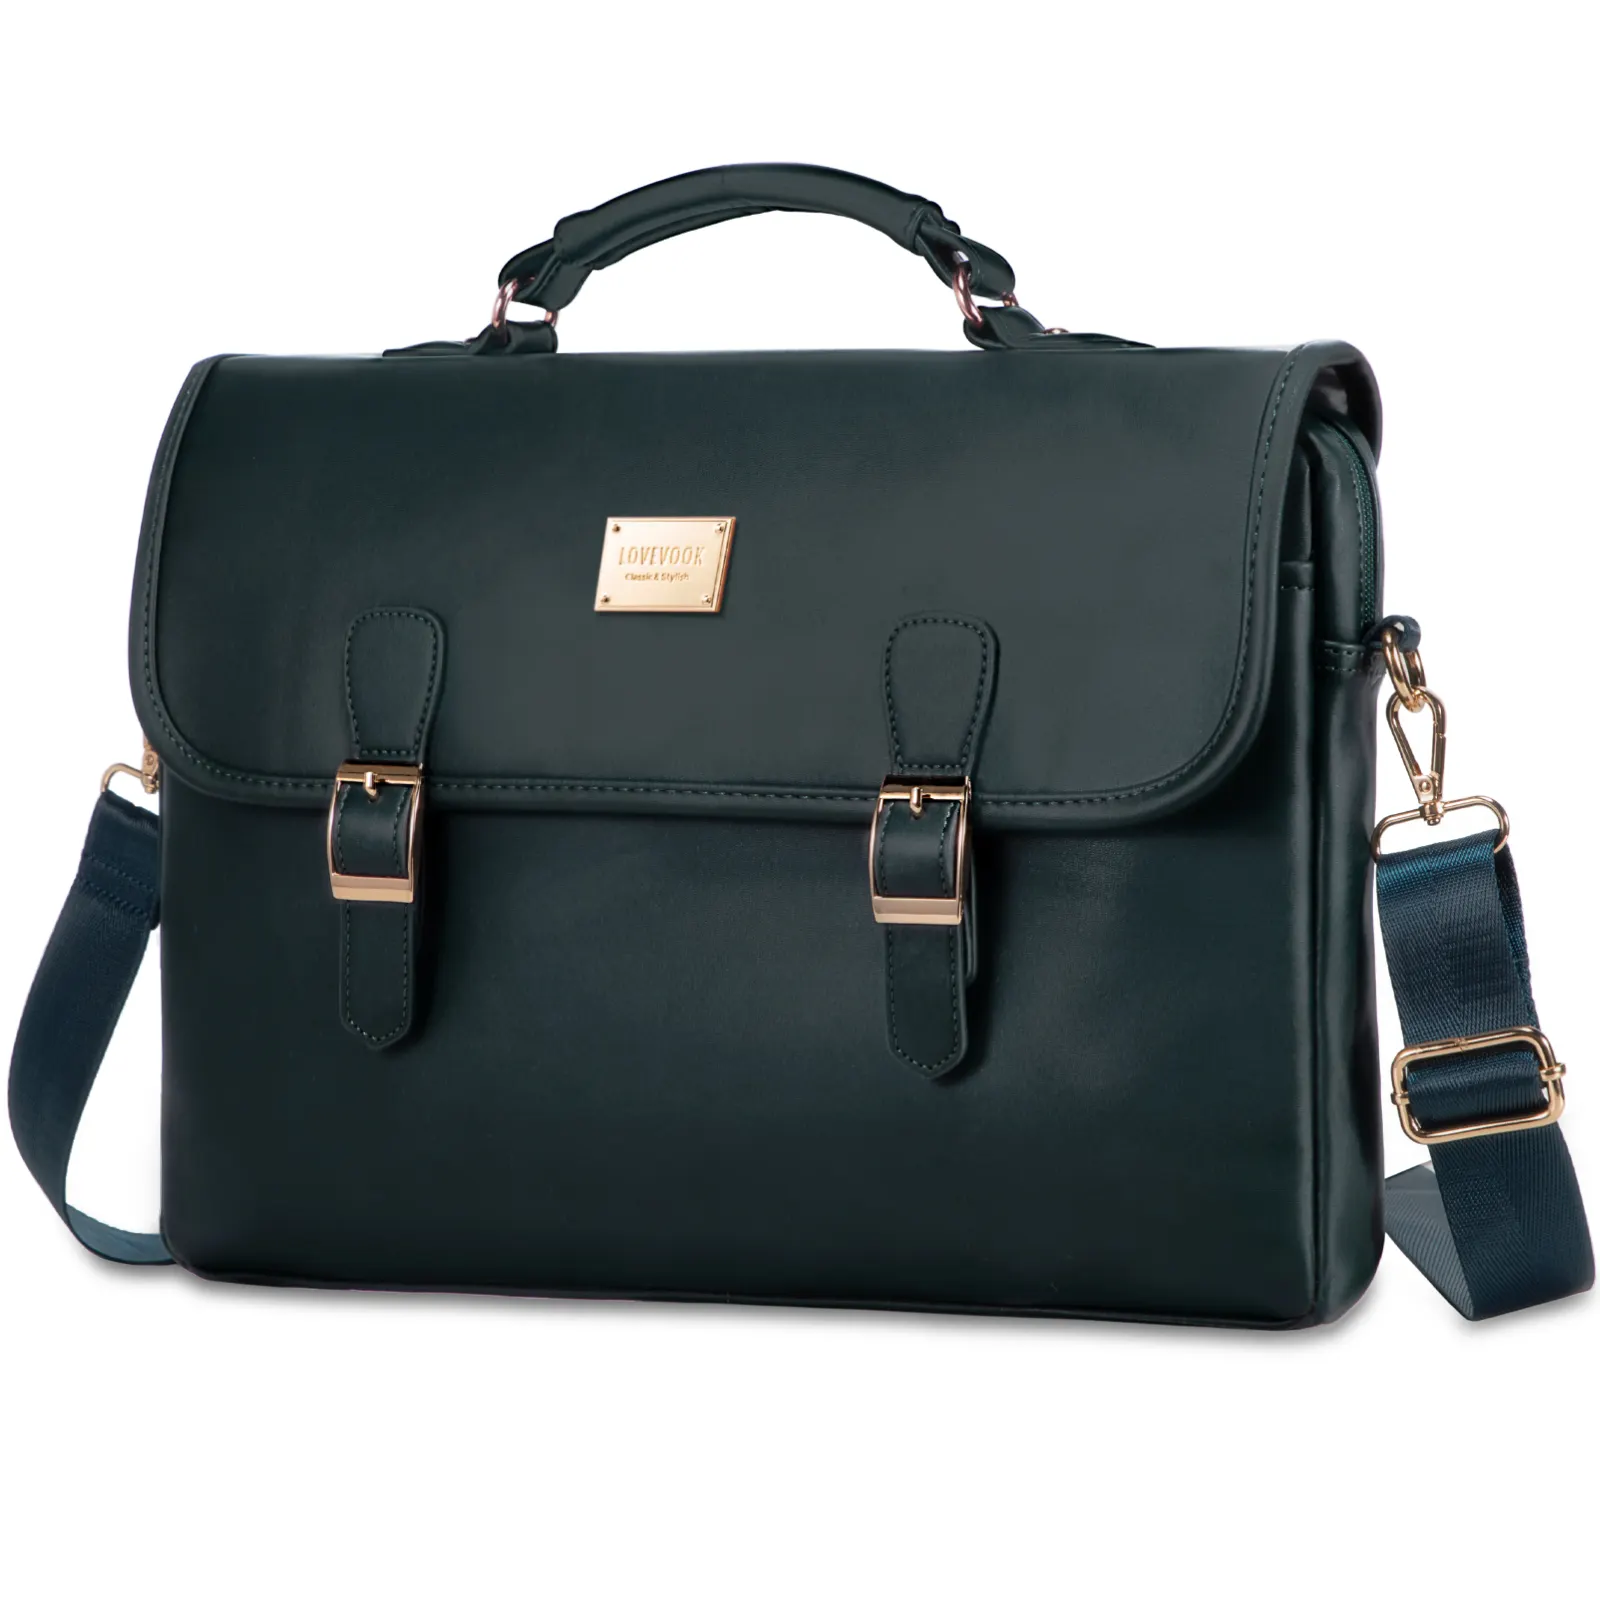 LOVEVOOK 15.6 inch laptop bags women business canvas shoulder bag large capacity ladies office handbags satchel bags women